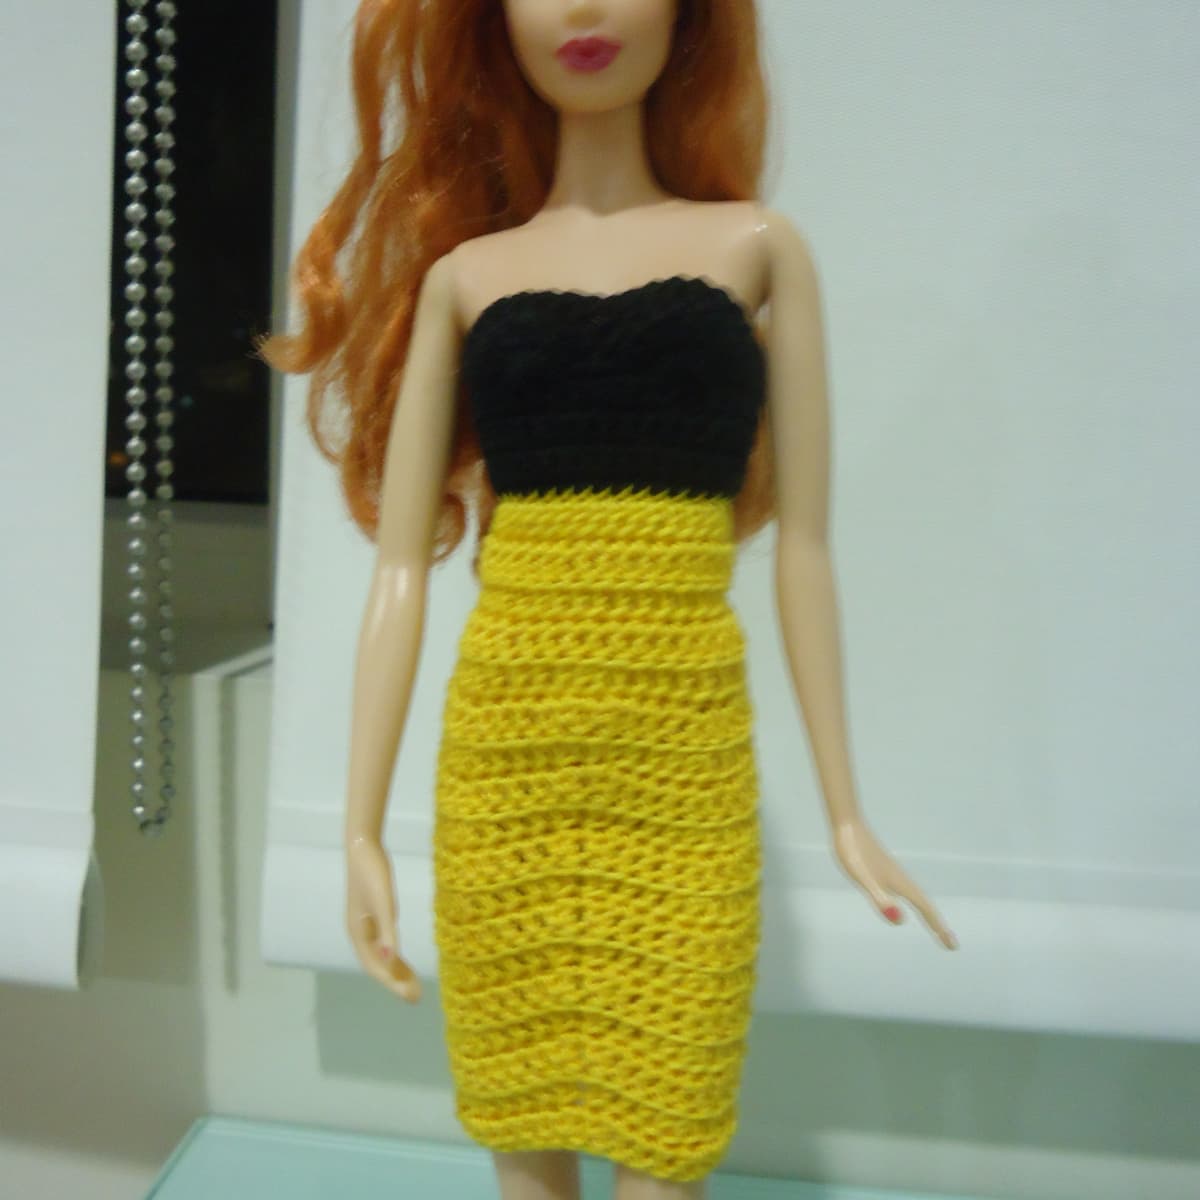 Barbie Strapless Dress Free Pattern – Janel Was Here